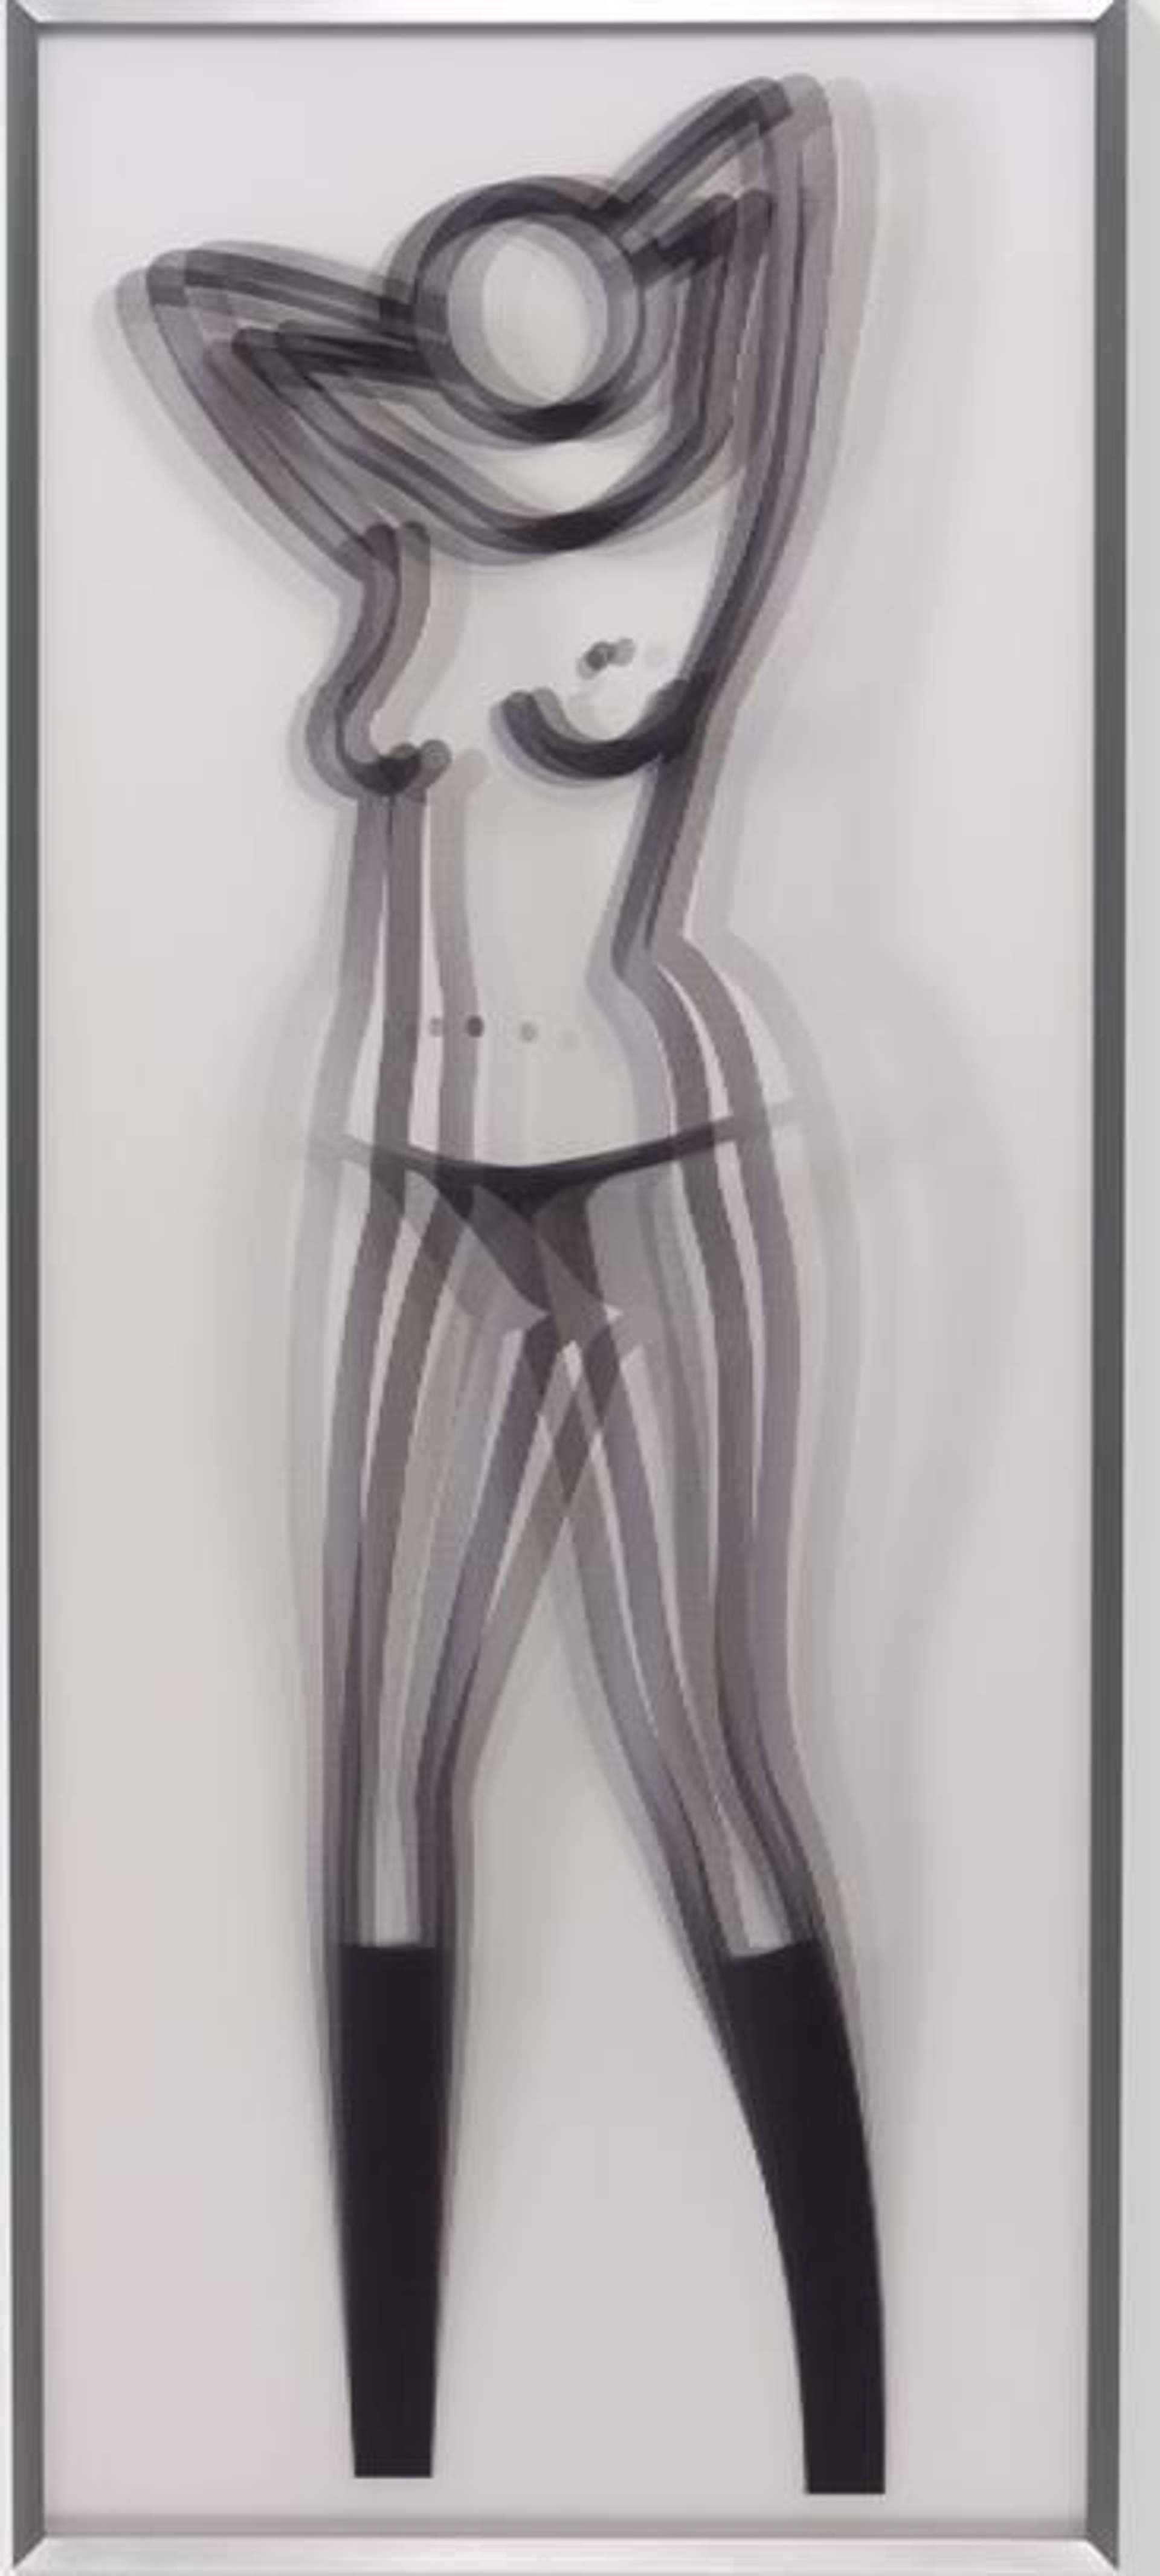 Sara Dancing Topless - Signed Print by Julian Opie 2007 - MyArtBroker